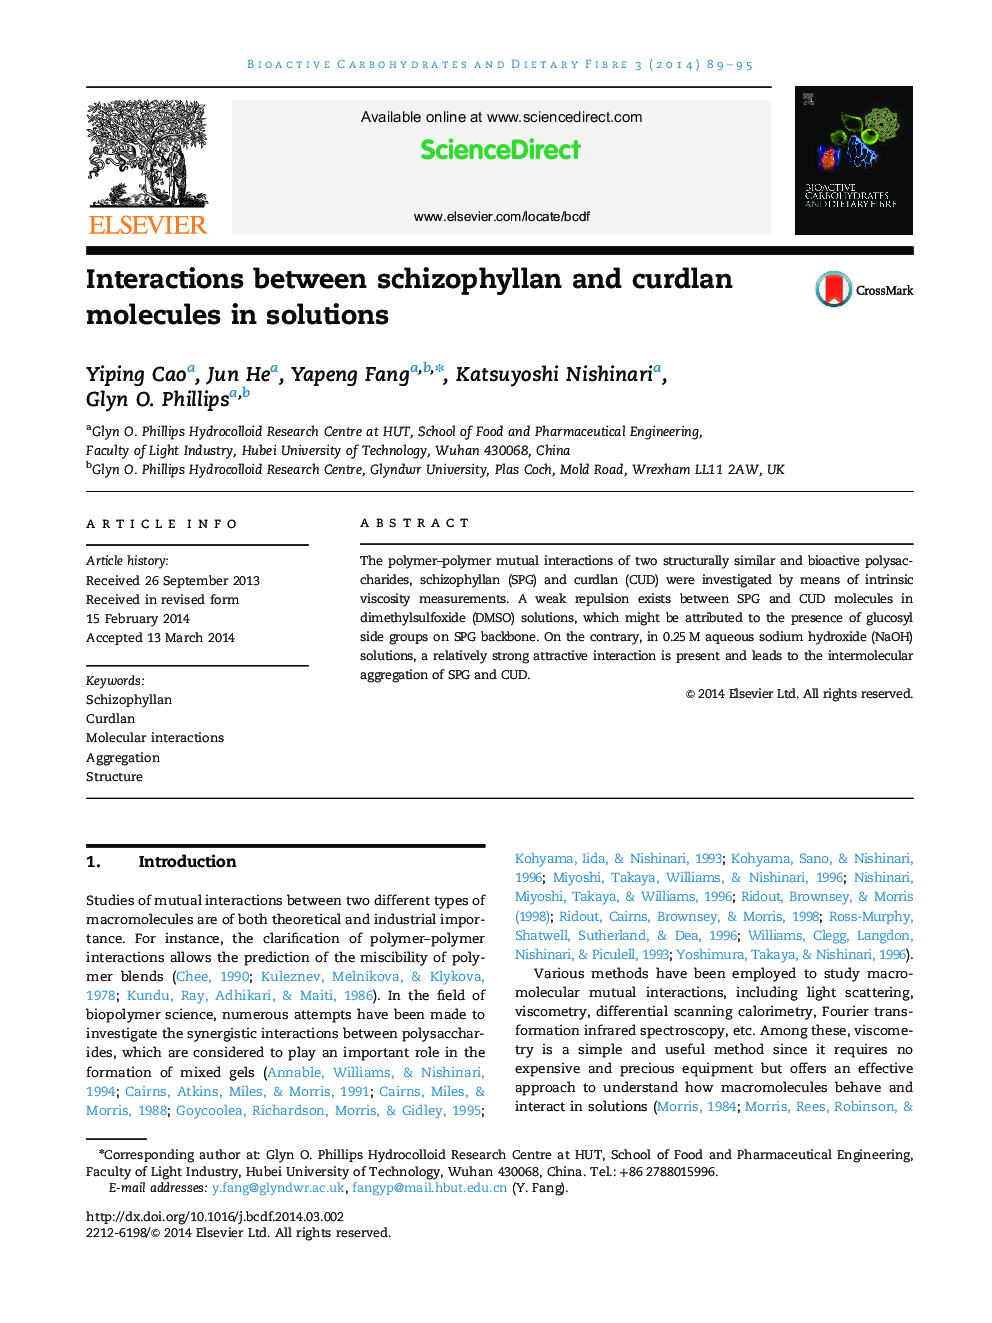 Interactions between schizophyllan and curdlan molecules in solutions